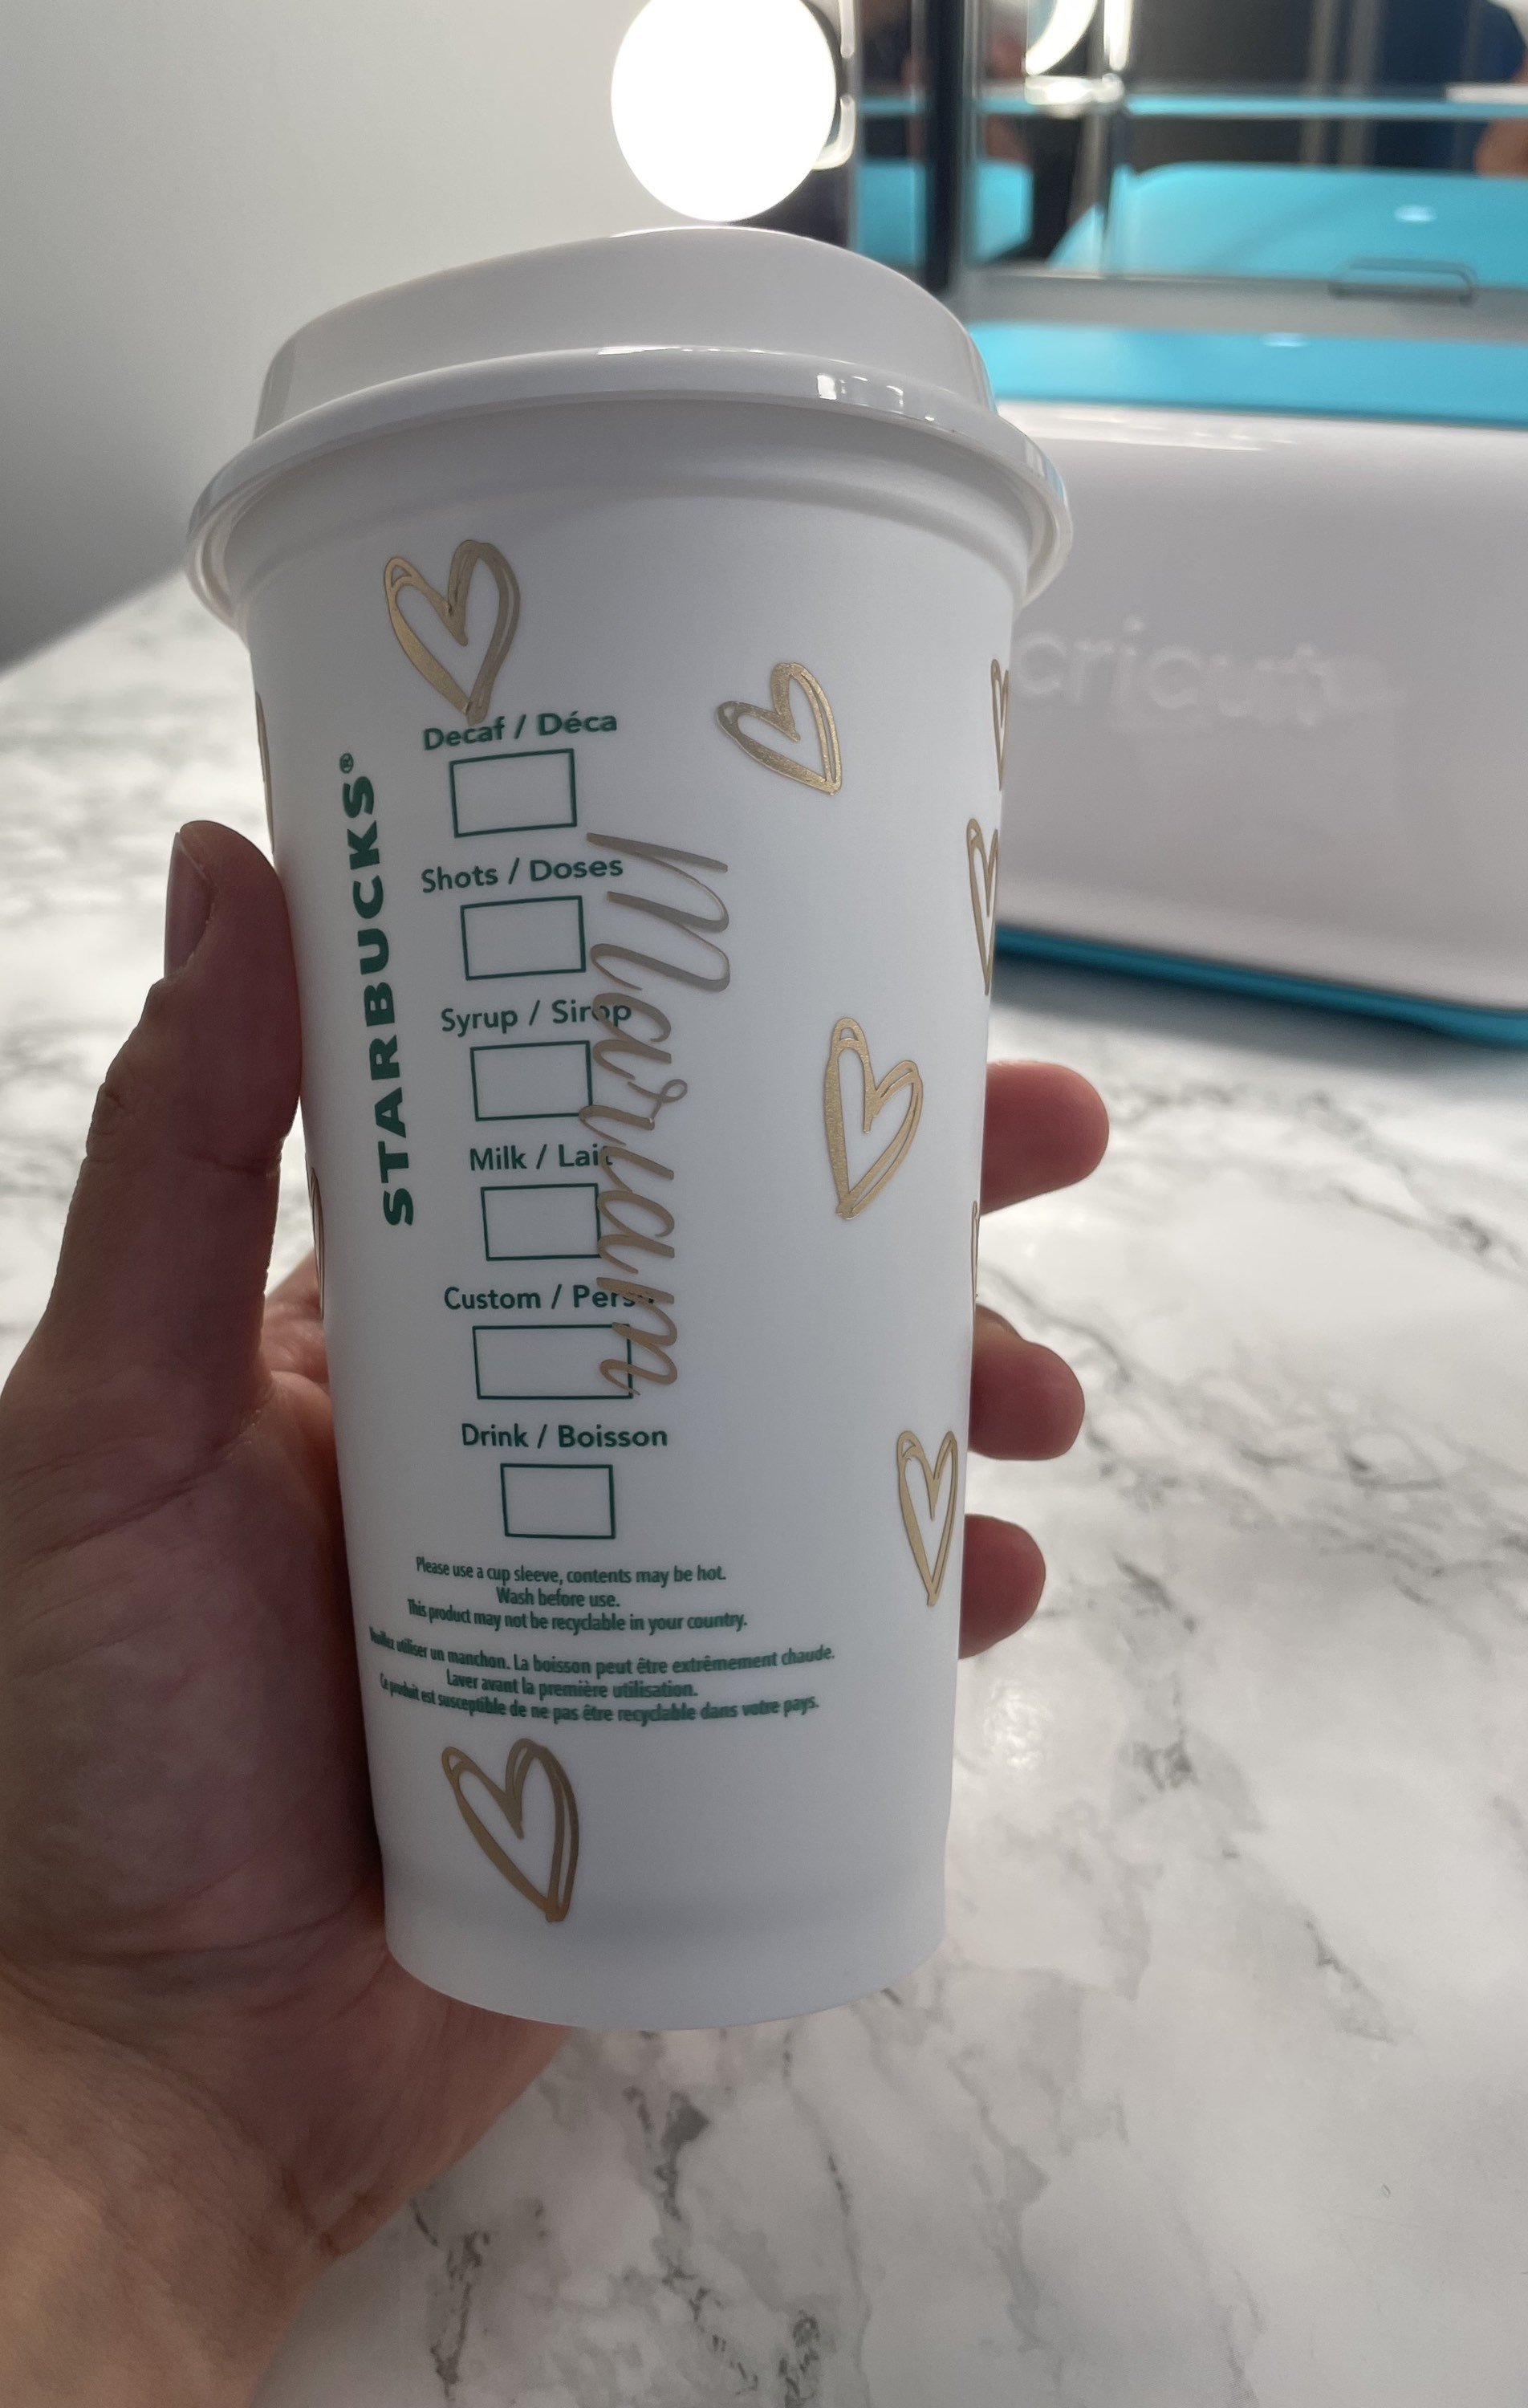 Starbucks Coffee Plastic PVC Vinyl Stickers decal for cups mug 2